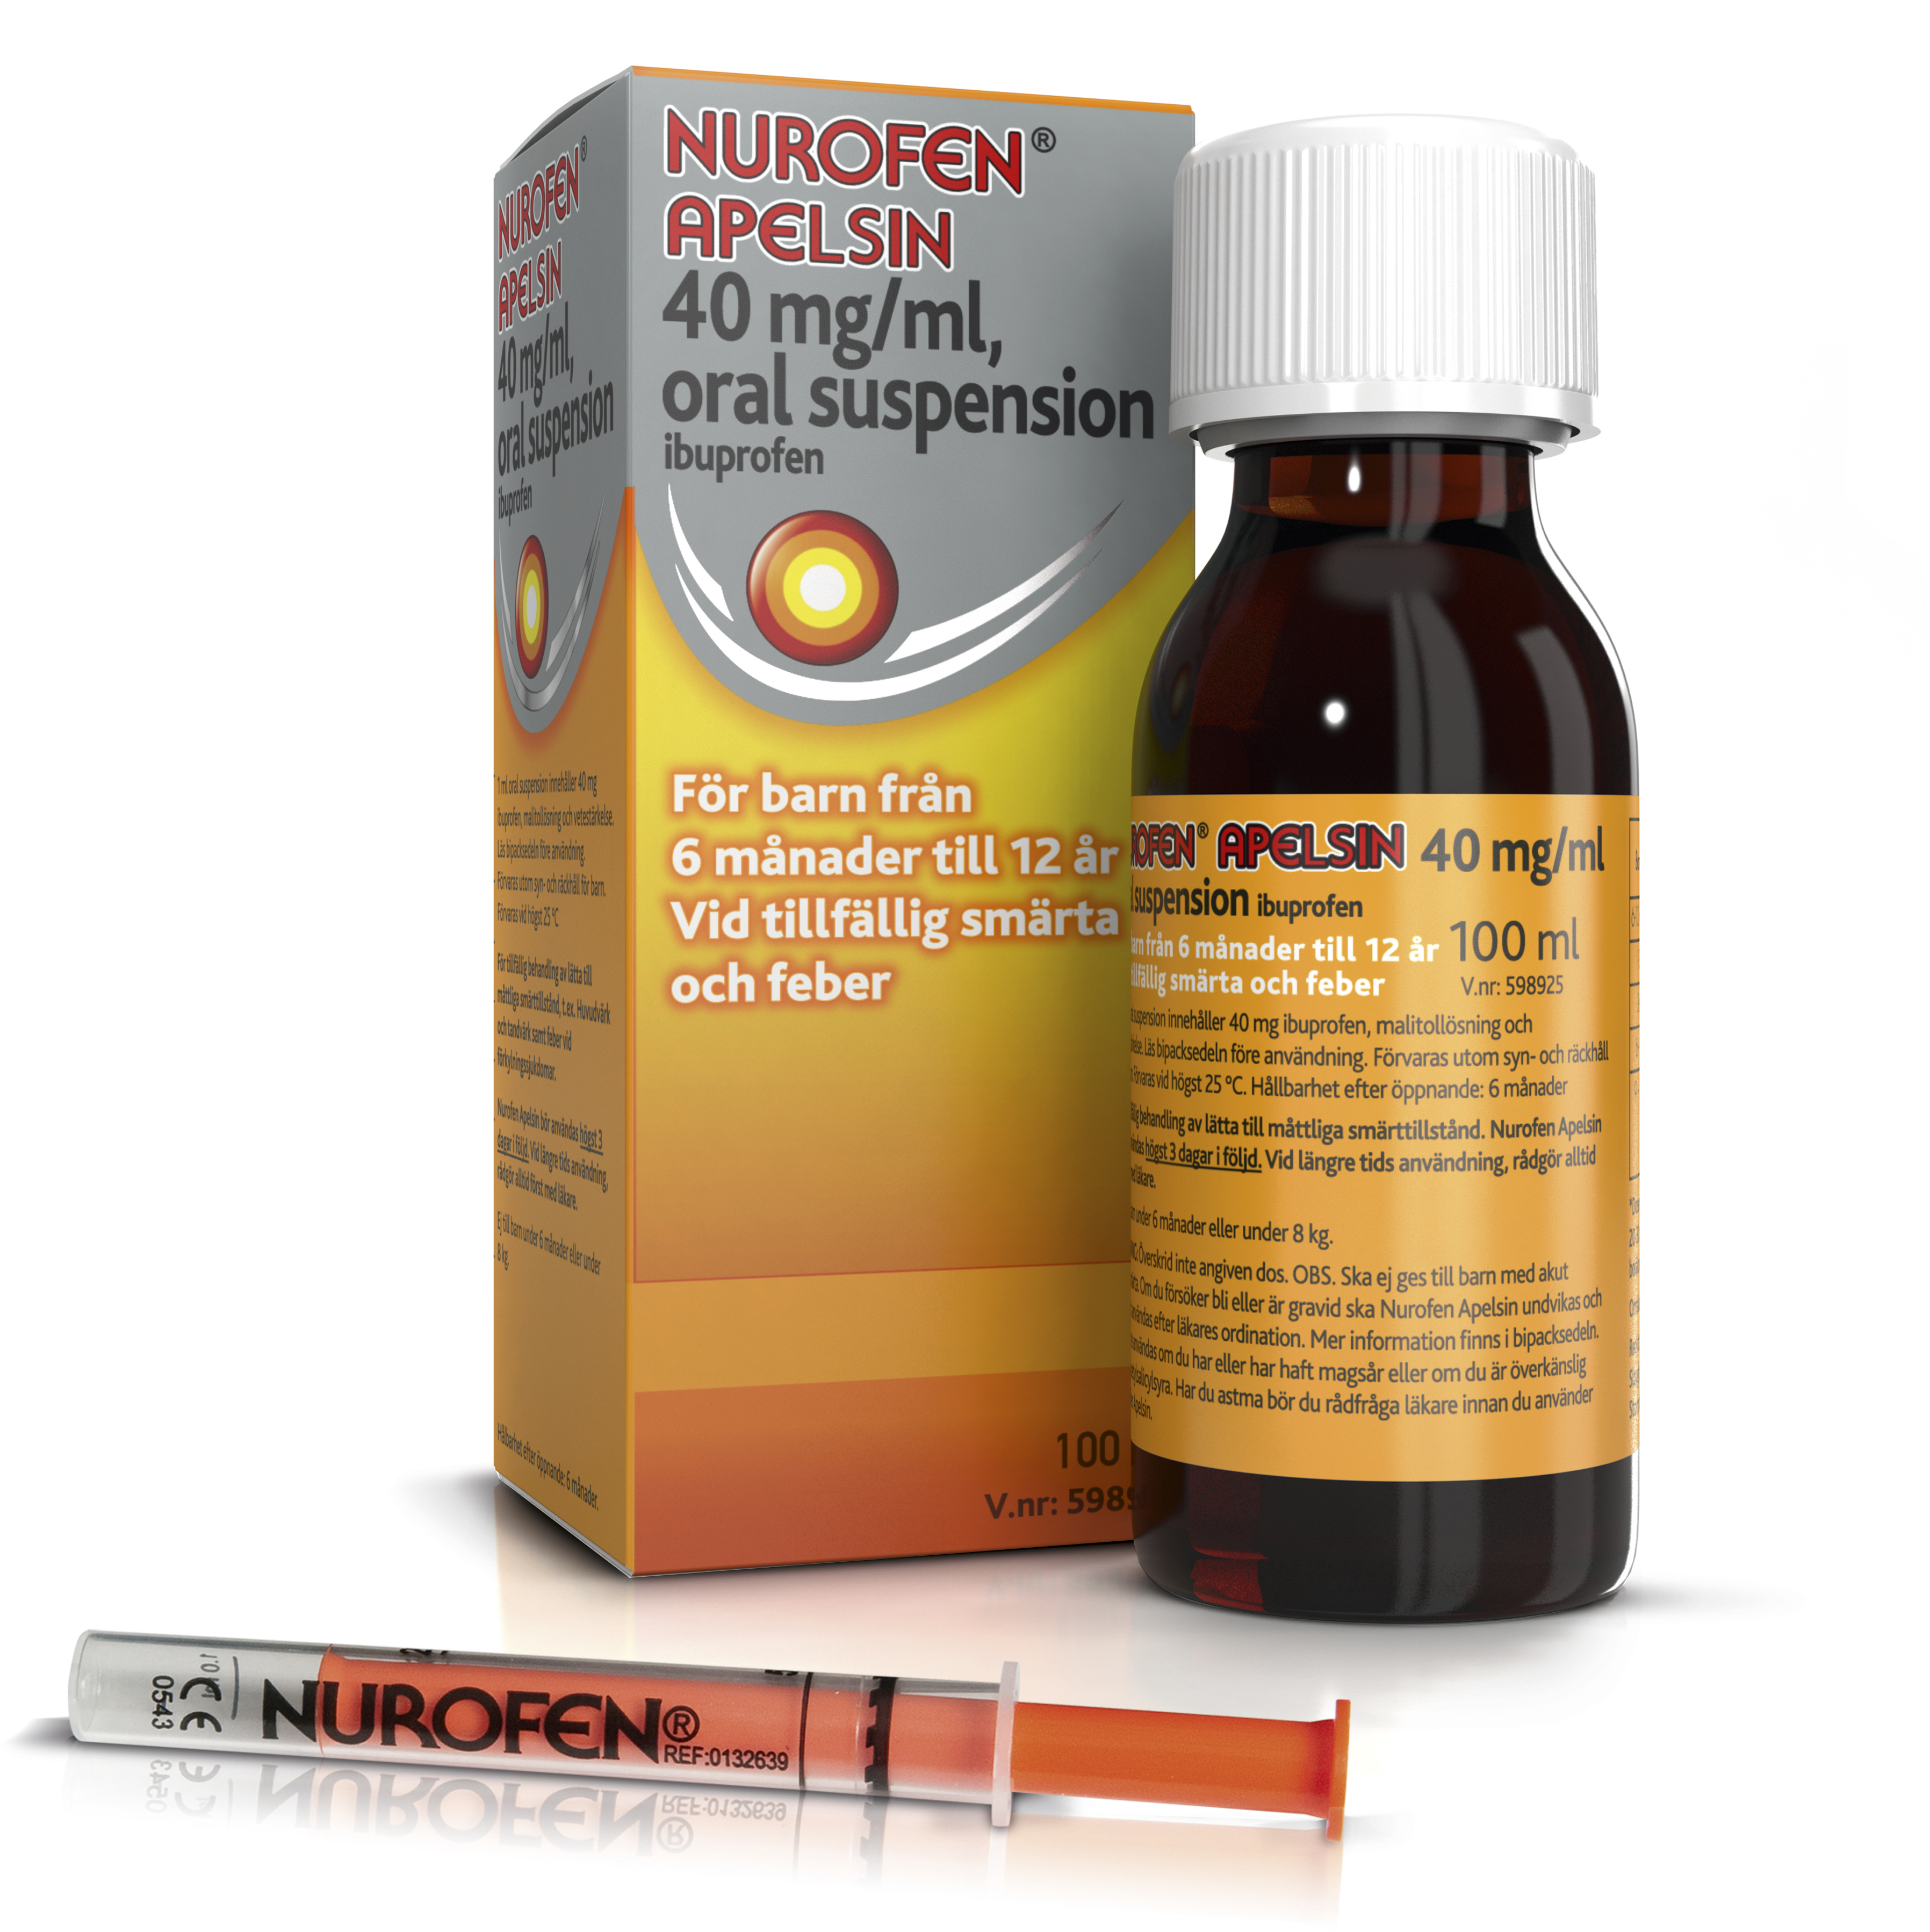 Nurofen Apelsin 40 mg/ml Ibuprofen Oral Suspension 100 ml